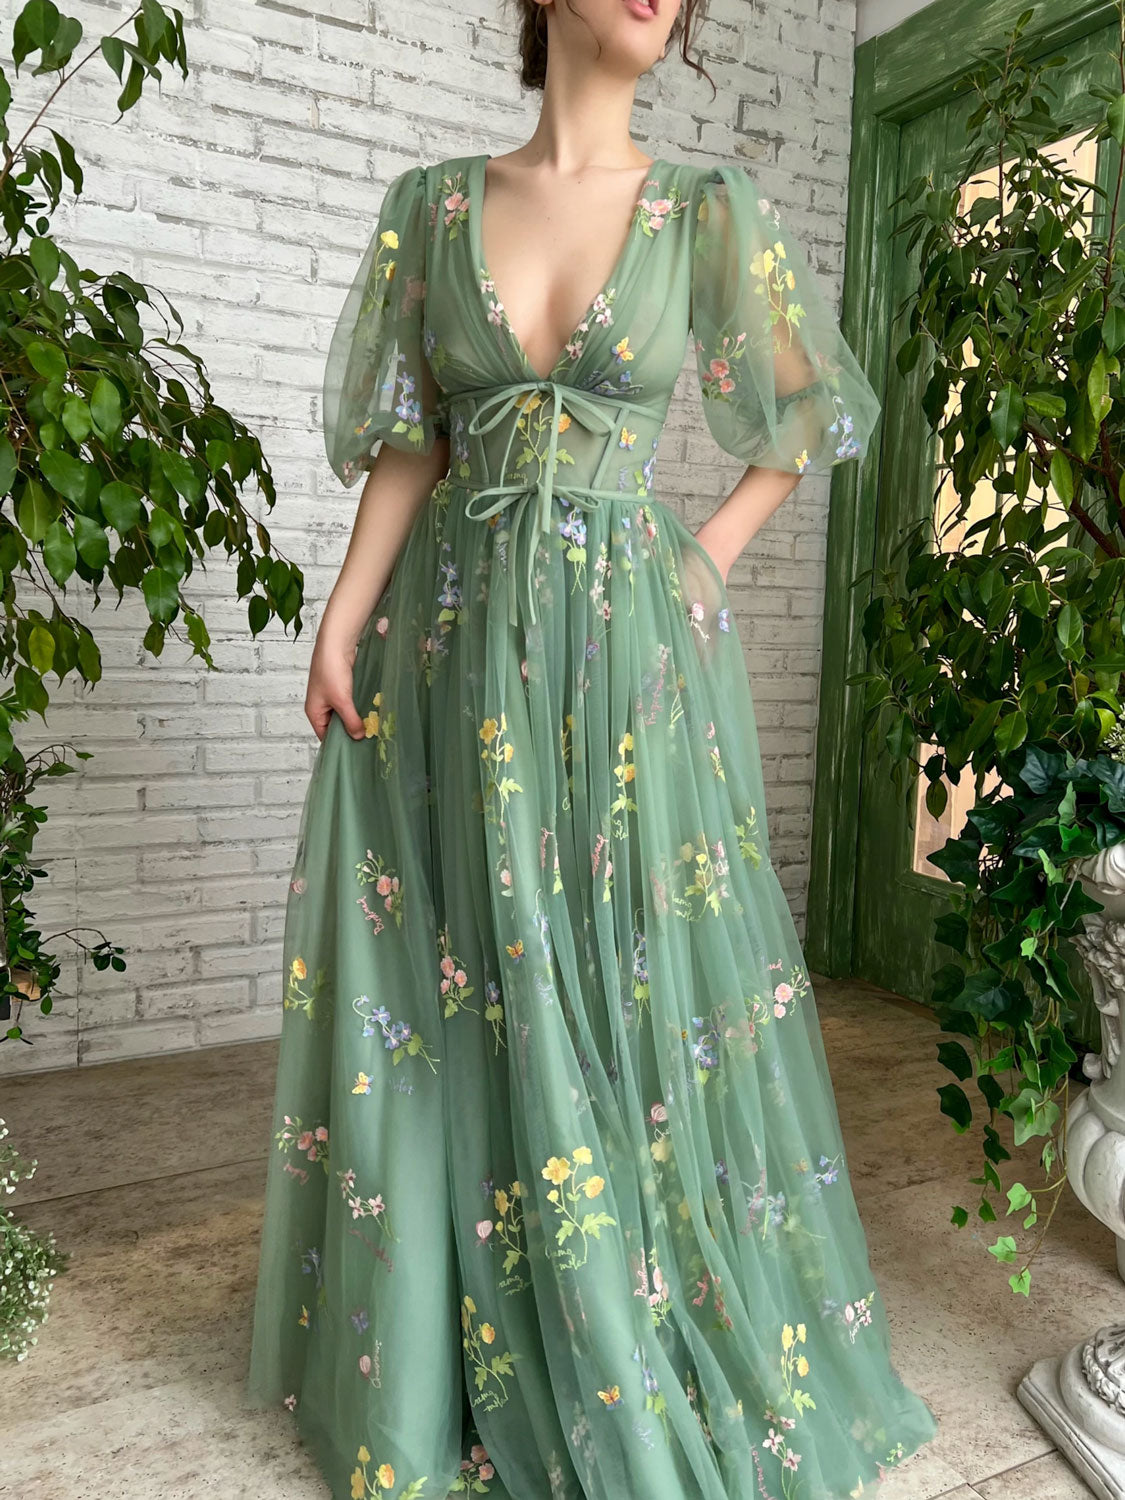 Green v neck tulle lace long prom dress, green tulle formal dress